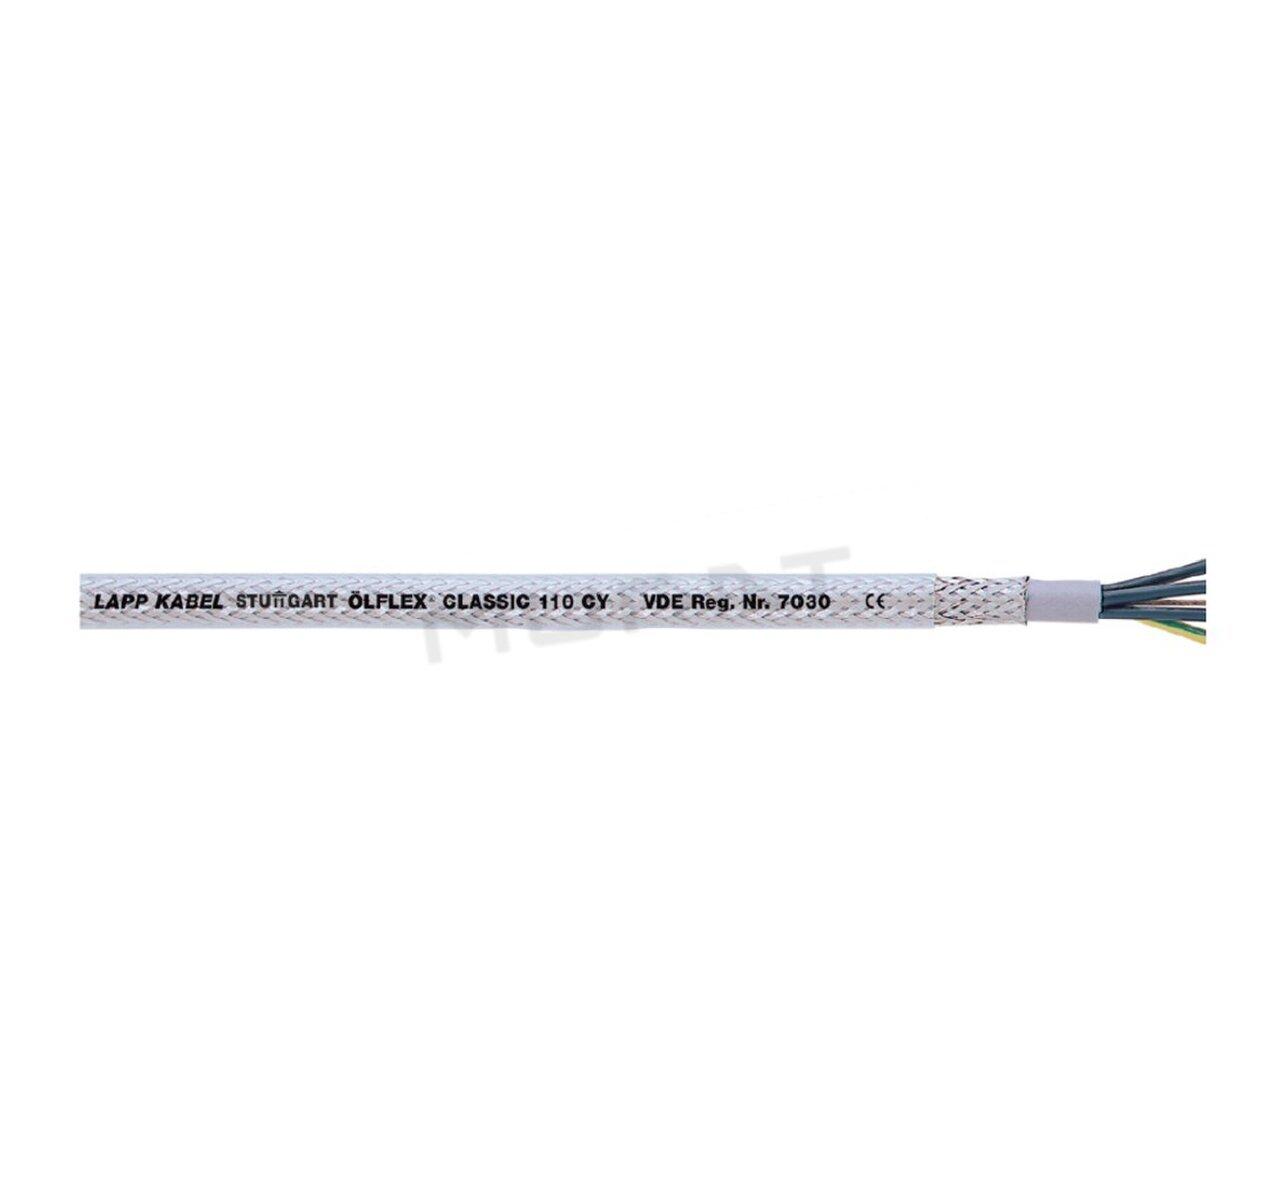 Kábel OLFLEX CLASSIC 110 CY 4Gx1,5 mm2